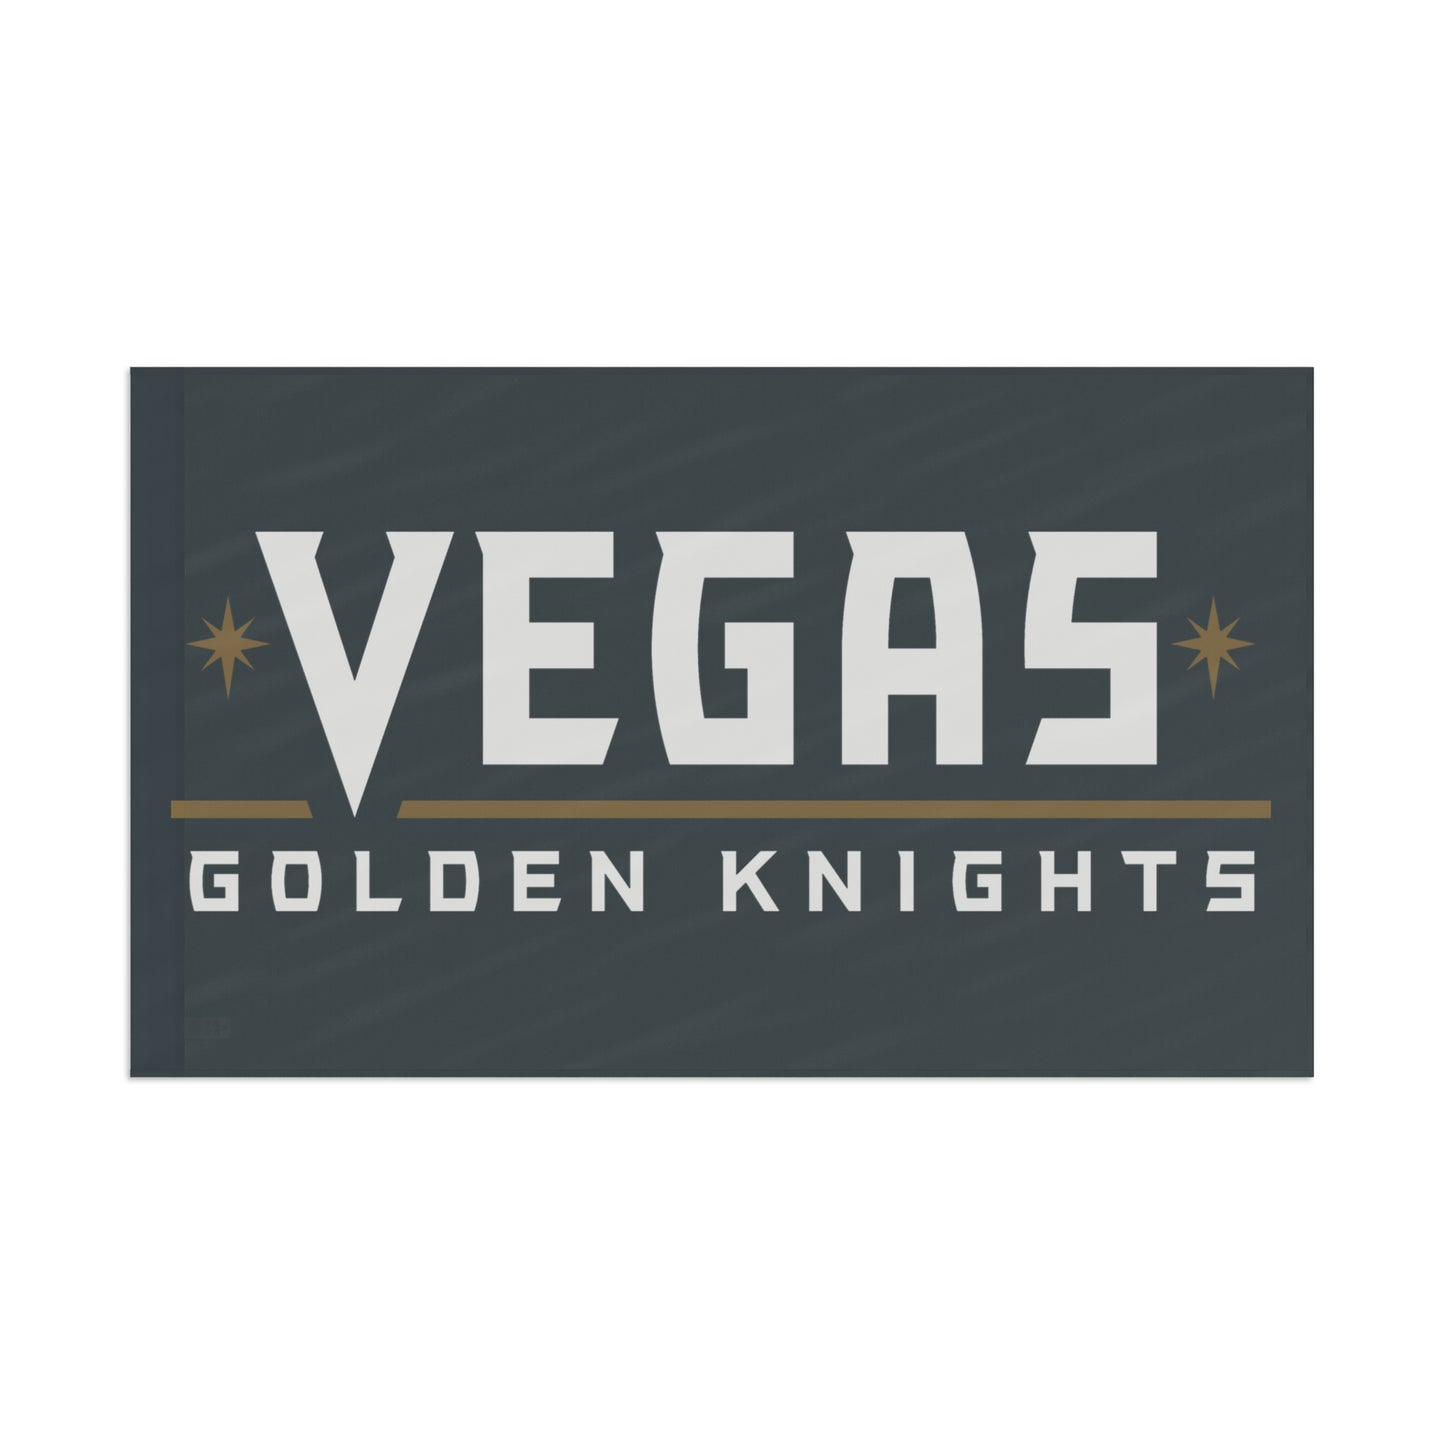 Las Vegas Golden Knights World Champions High Definition Print Flag NHL